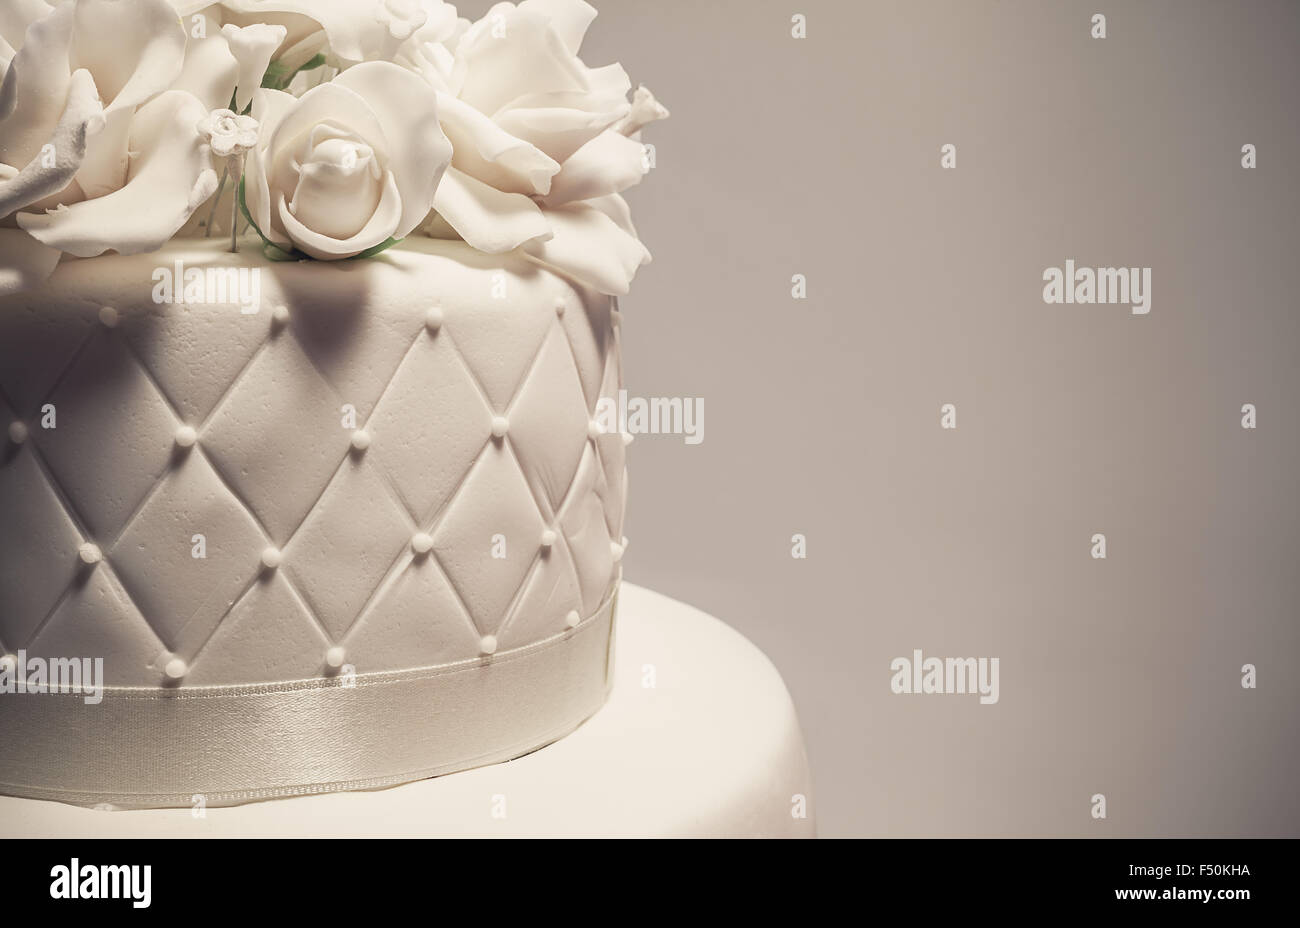 Details of a wedding cake, decoration with white fondant on white background. Stock Photo